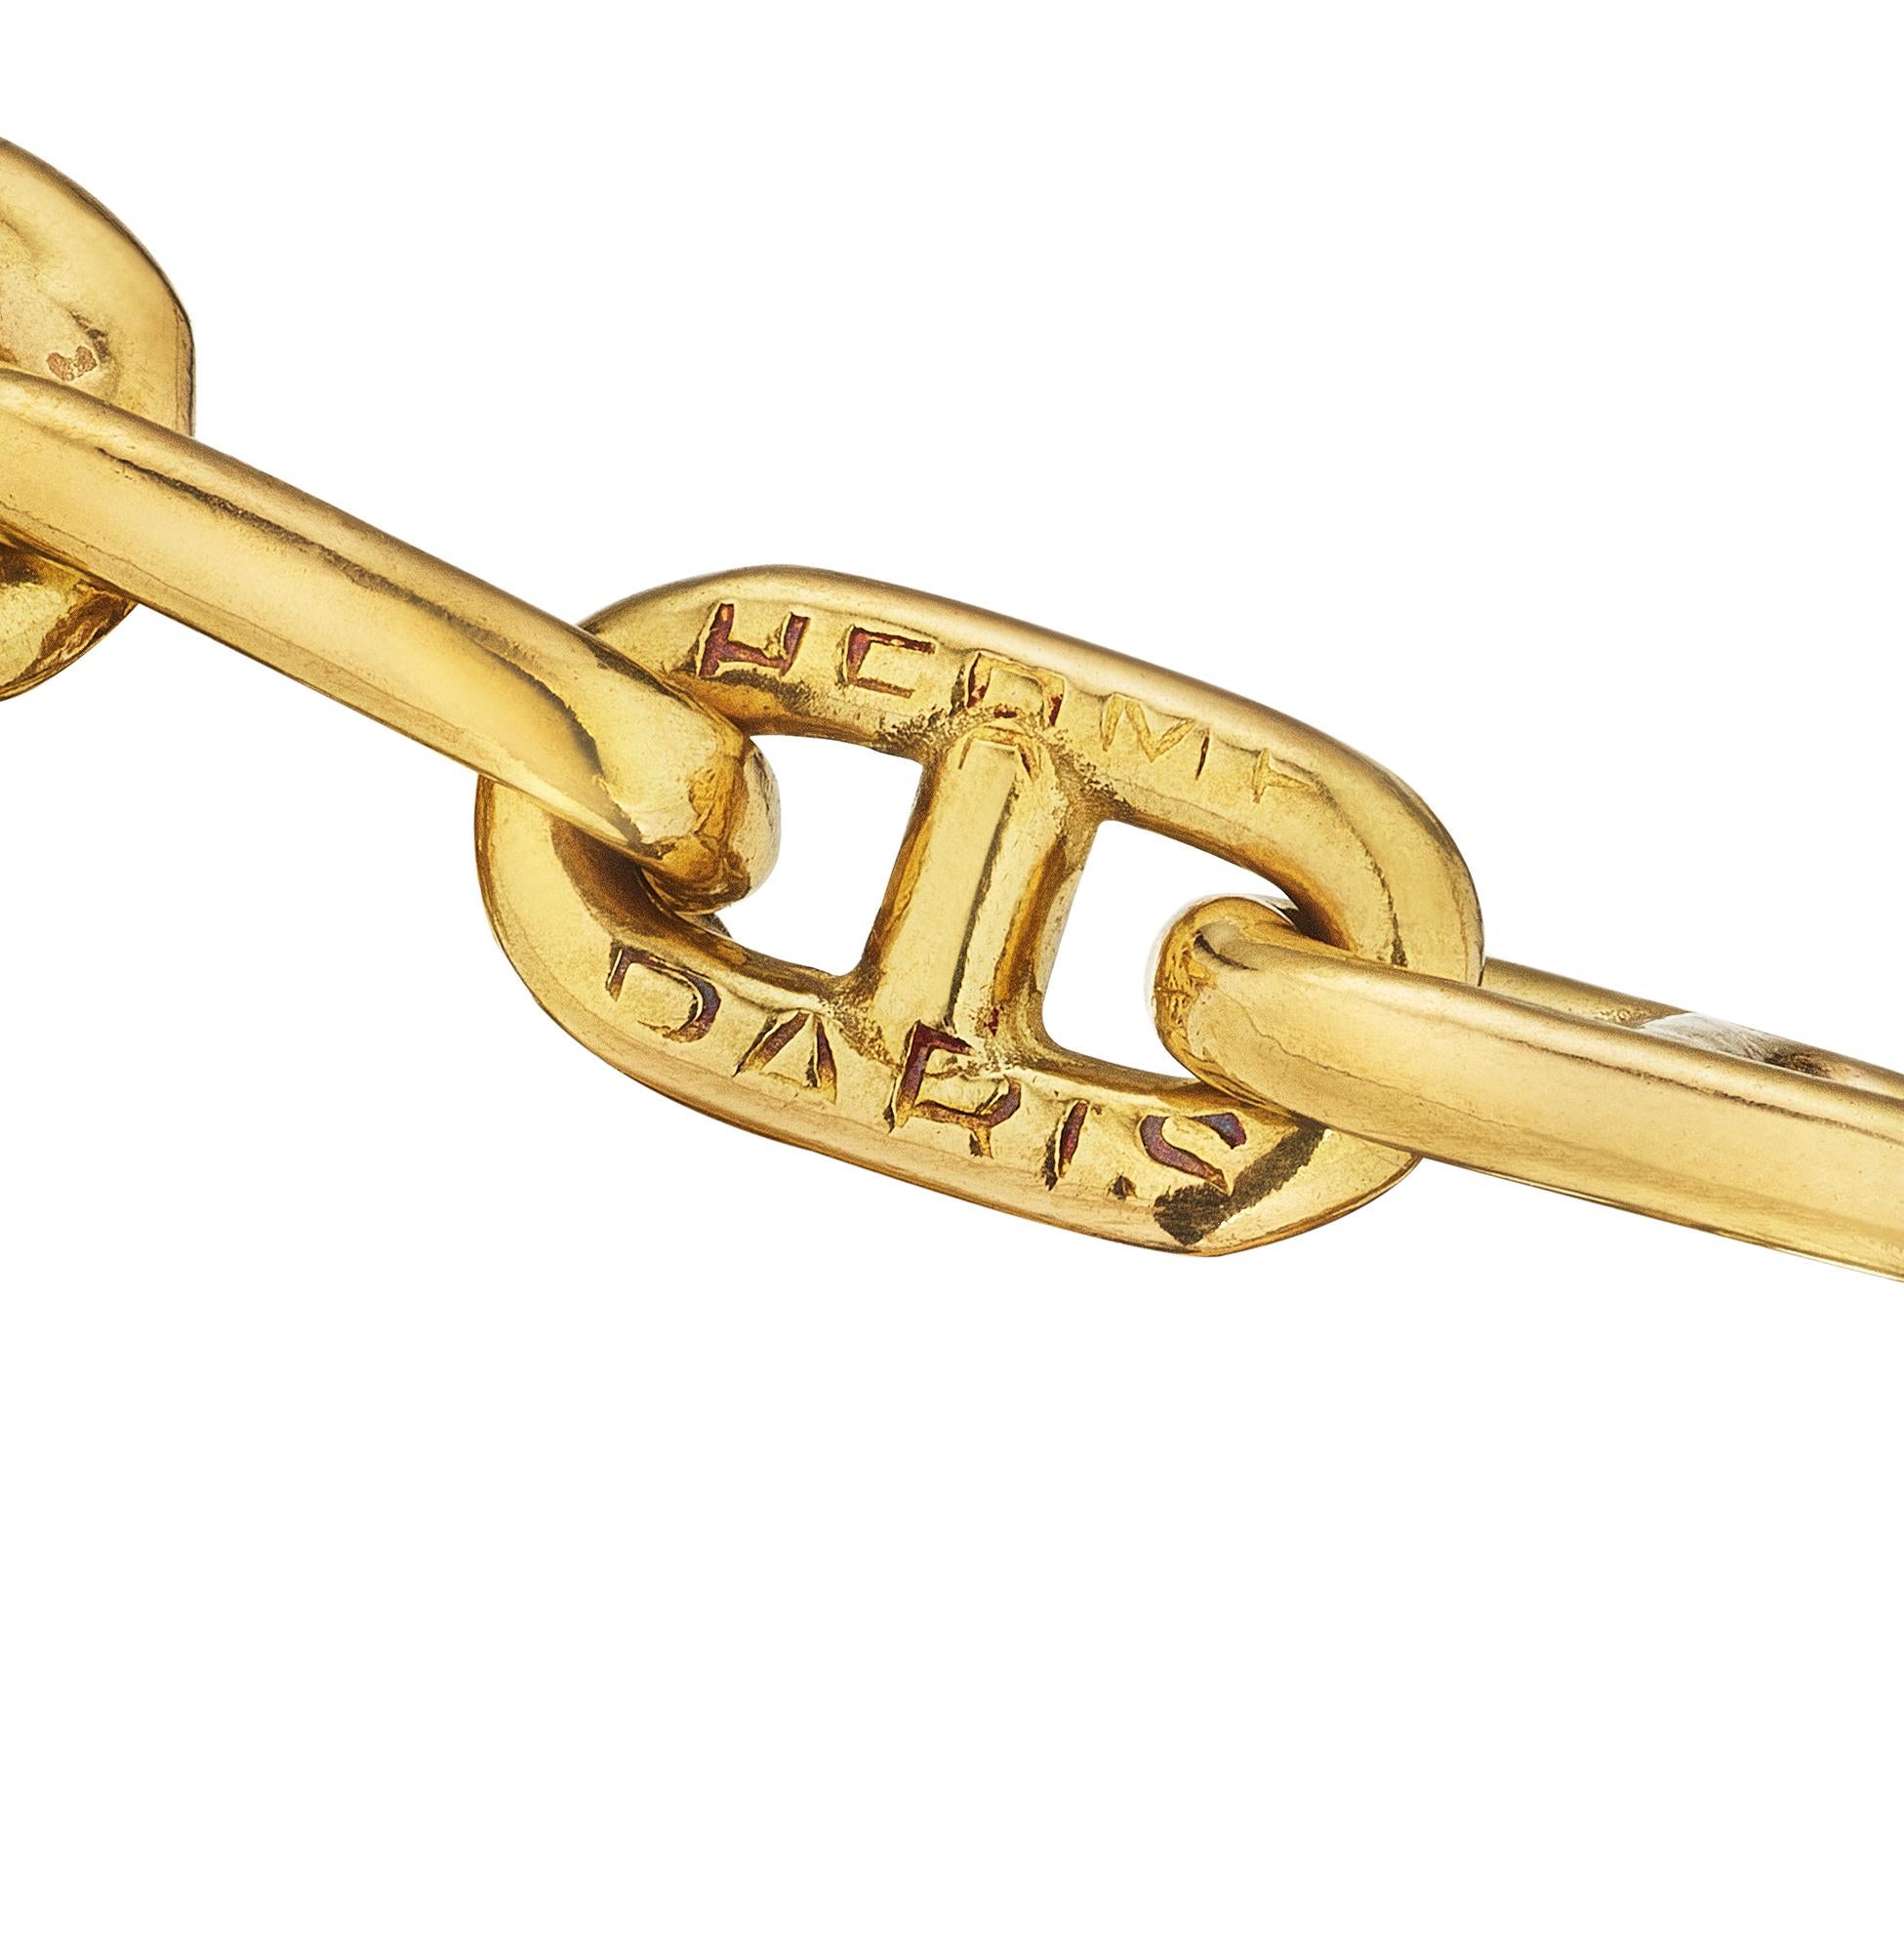 Contemporary Hermes Paris Modernist 'Chain D'Ancre' Long Toggle Link Gold Modernist Necklace For Sale